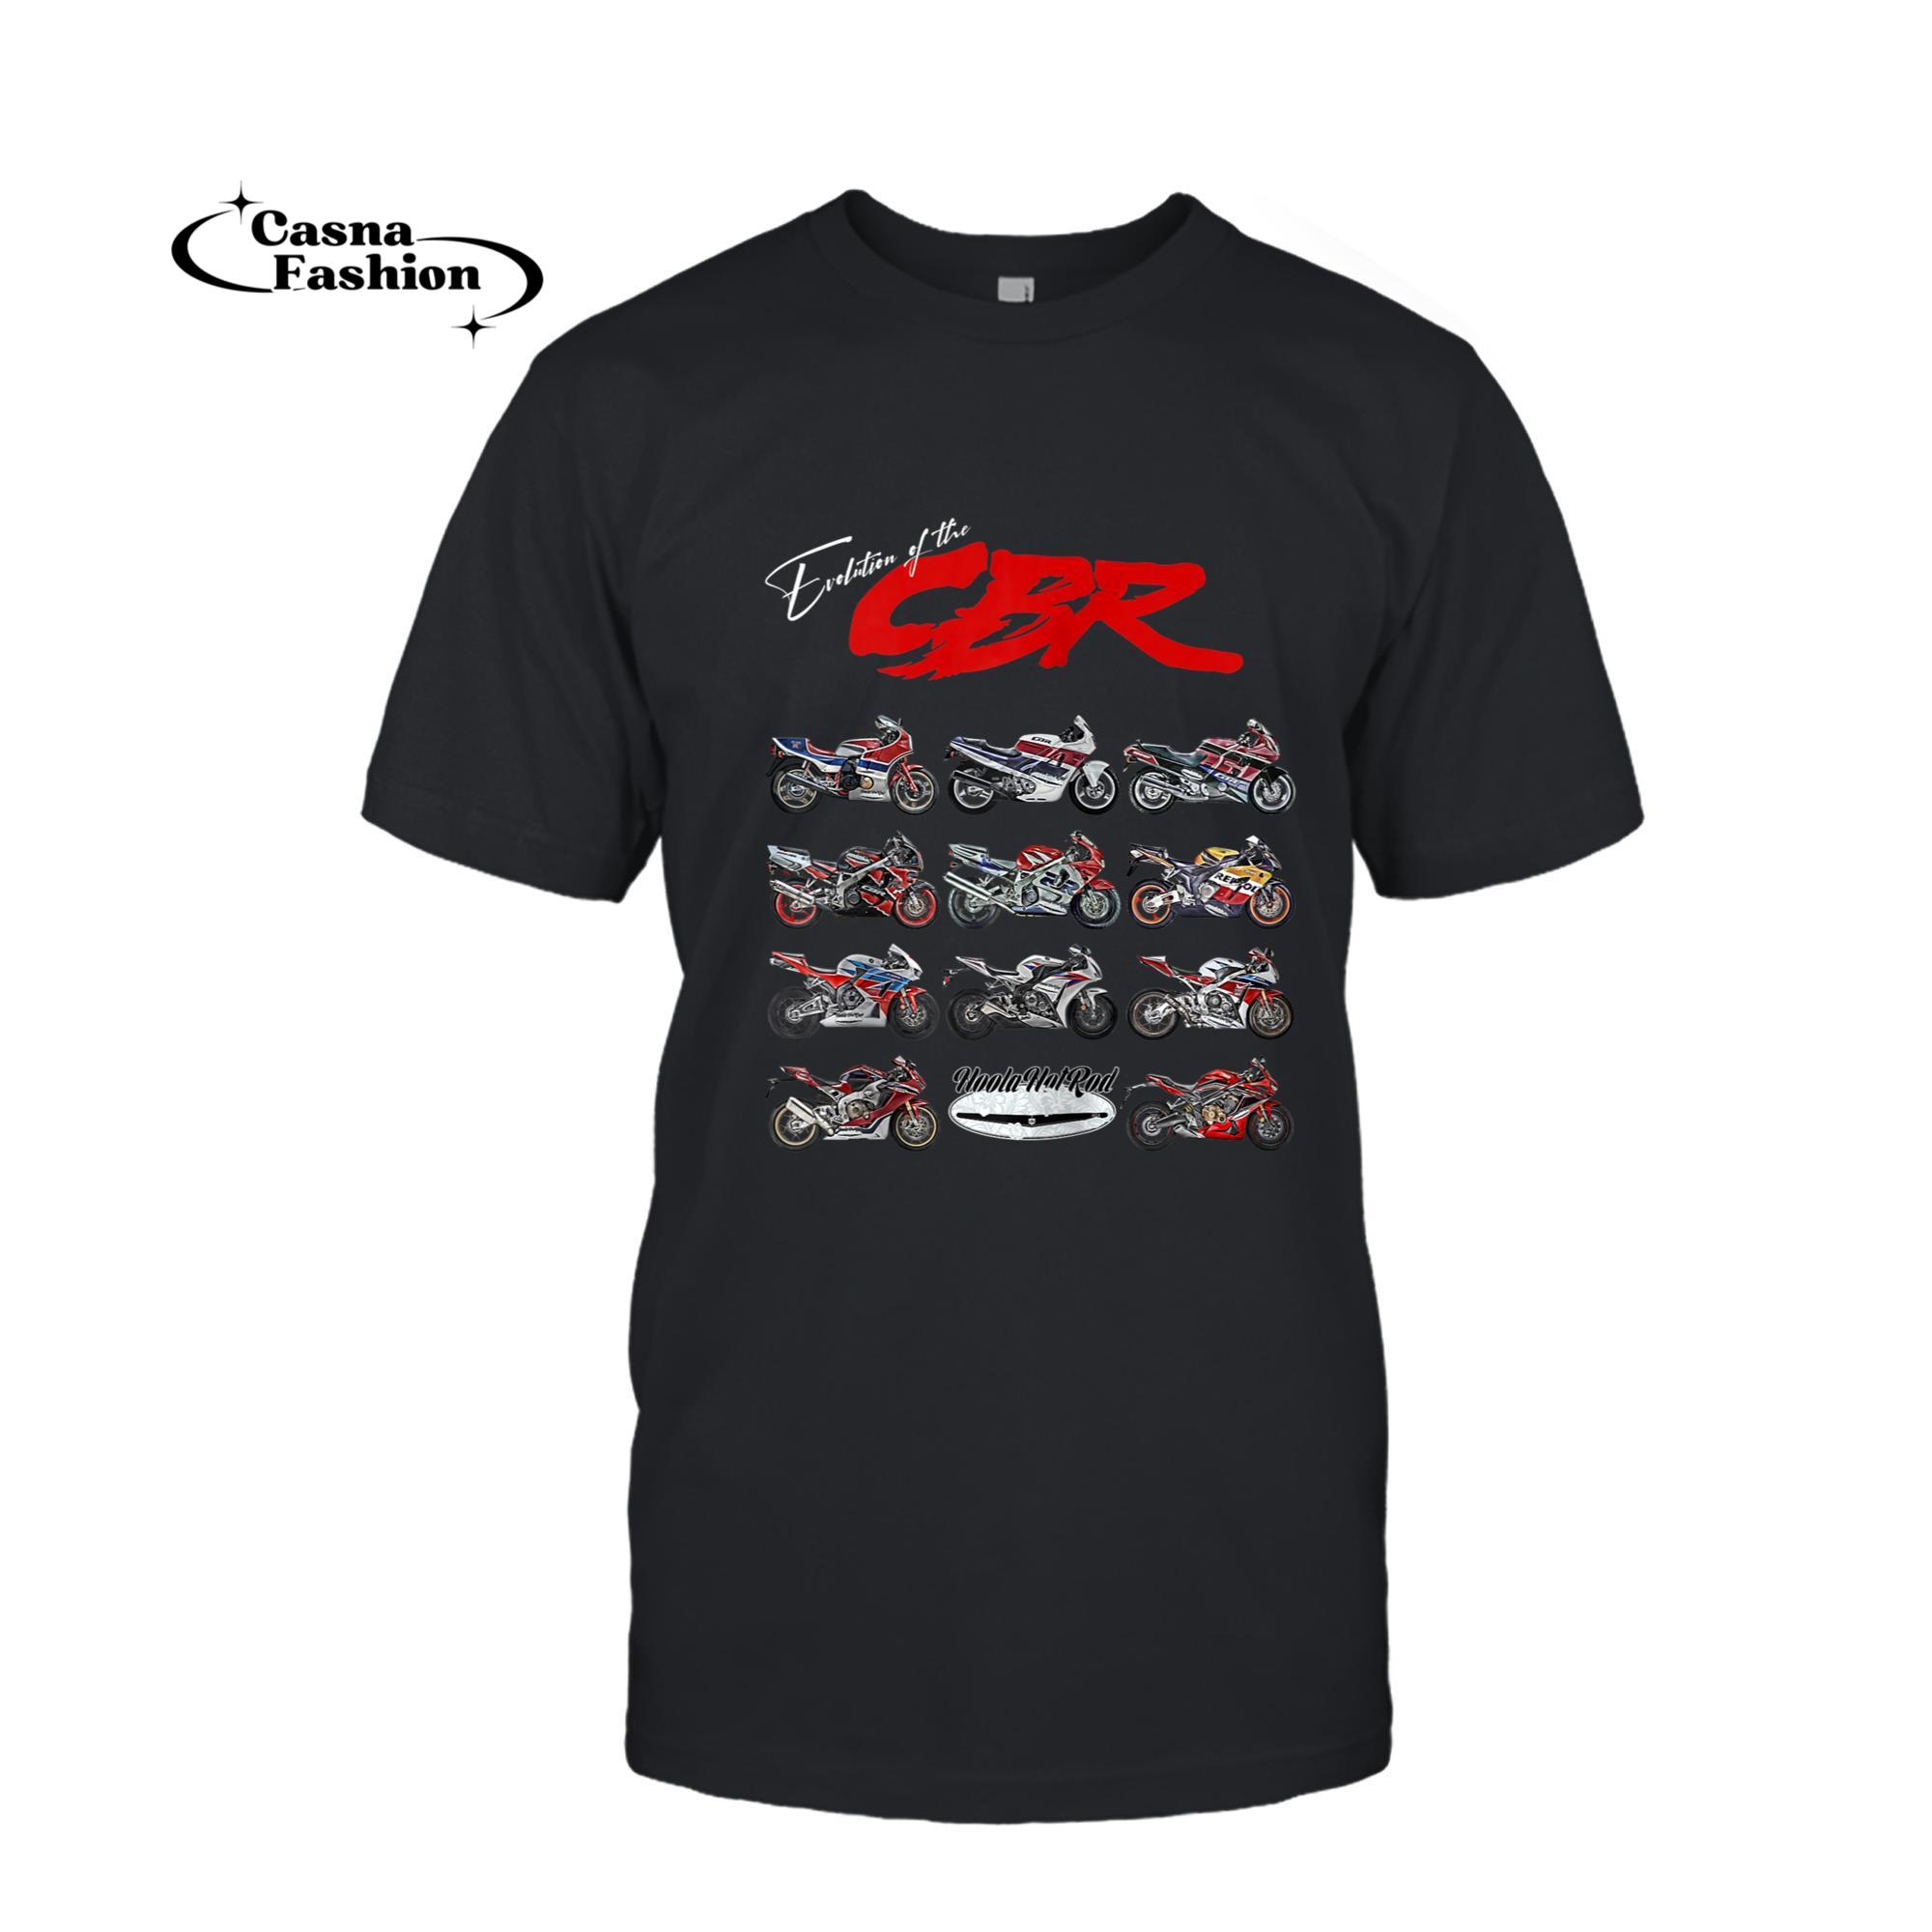 casnafashion_T-shirt_Evolution of the, CBR,Motorcycle,Motorbike,Biker,Sportsbike Zip Hoodie_T-shirt_Black